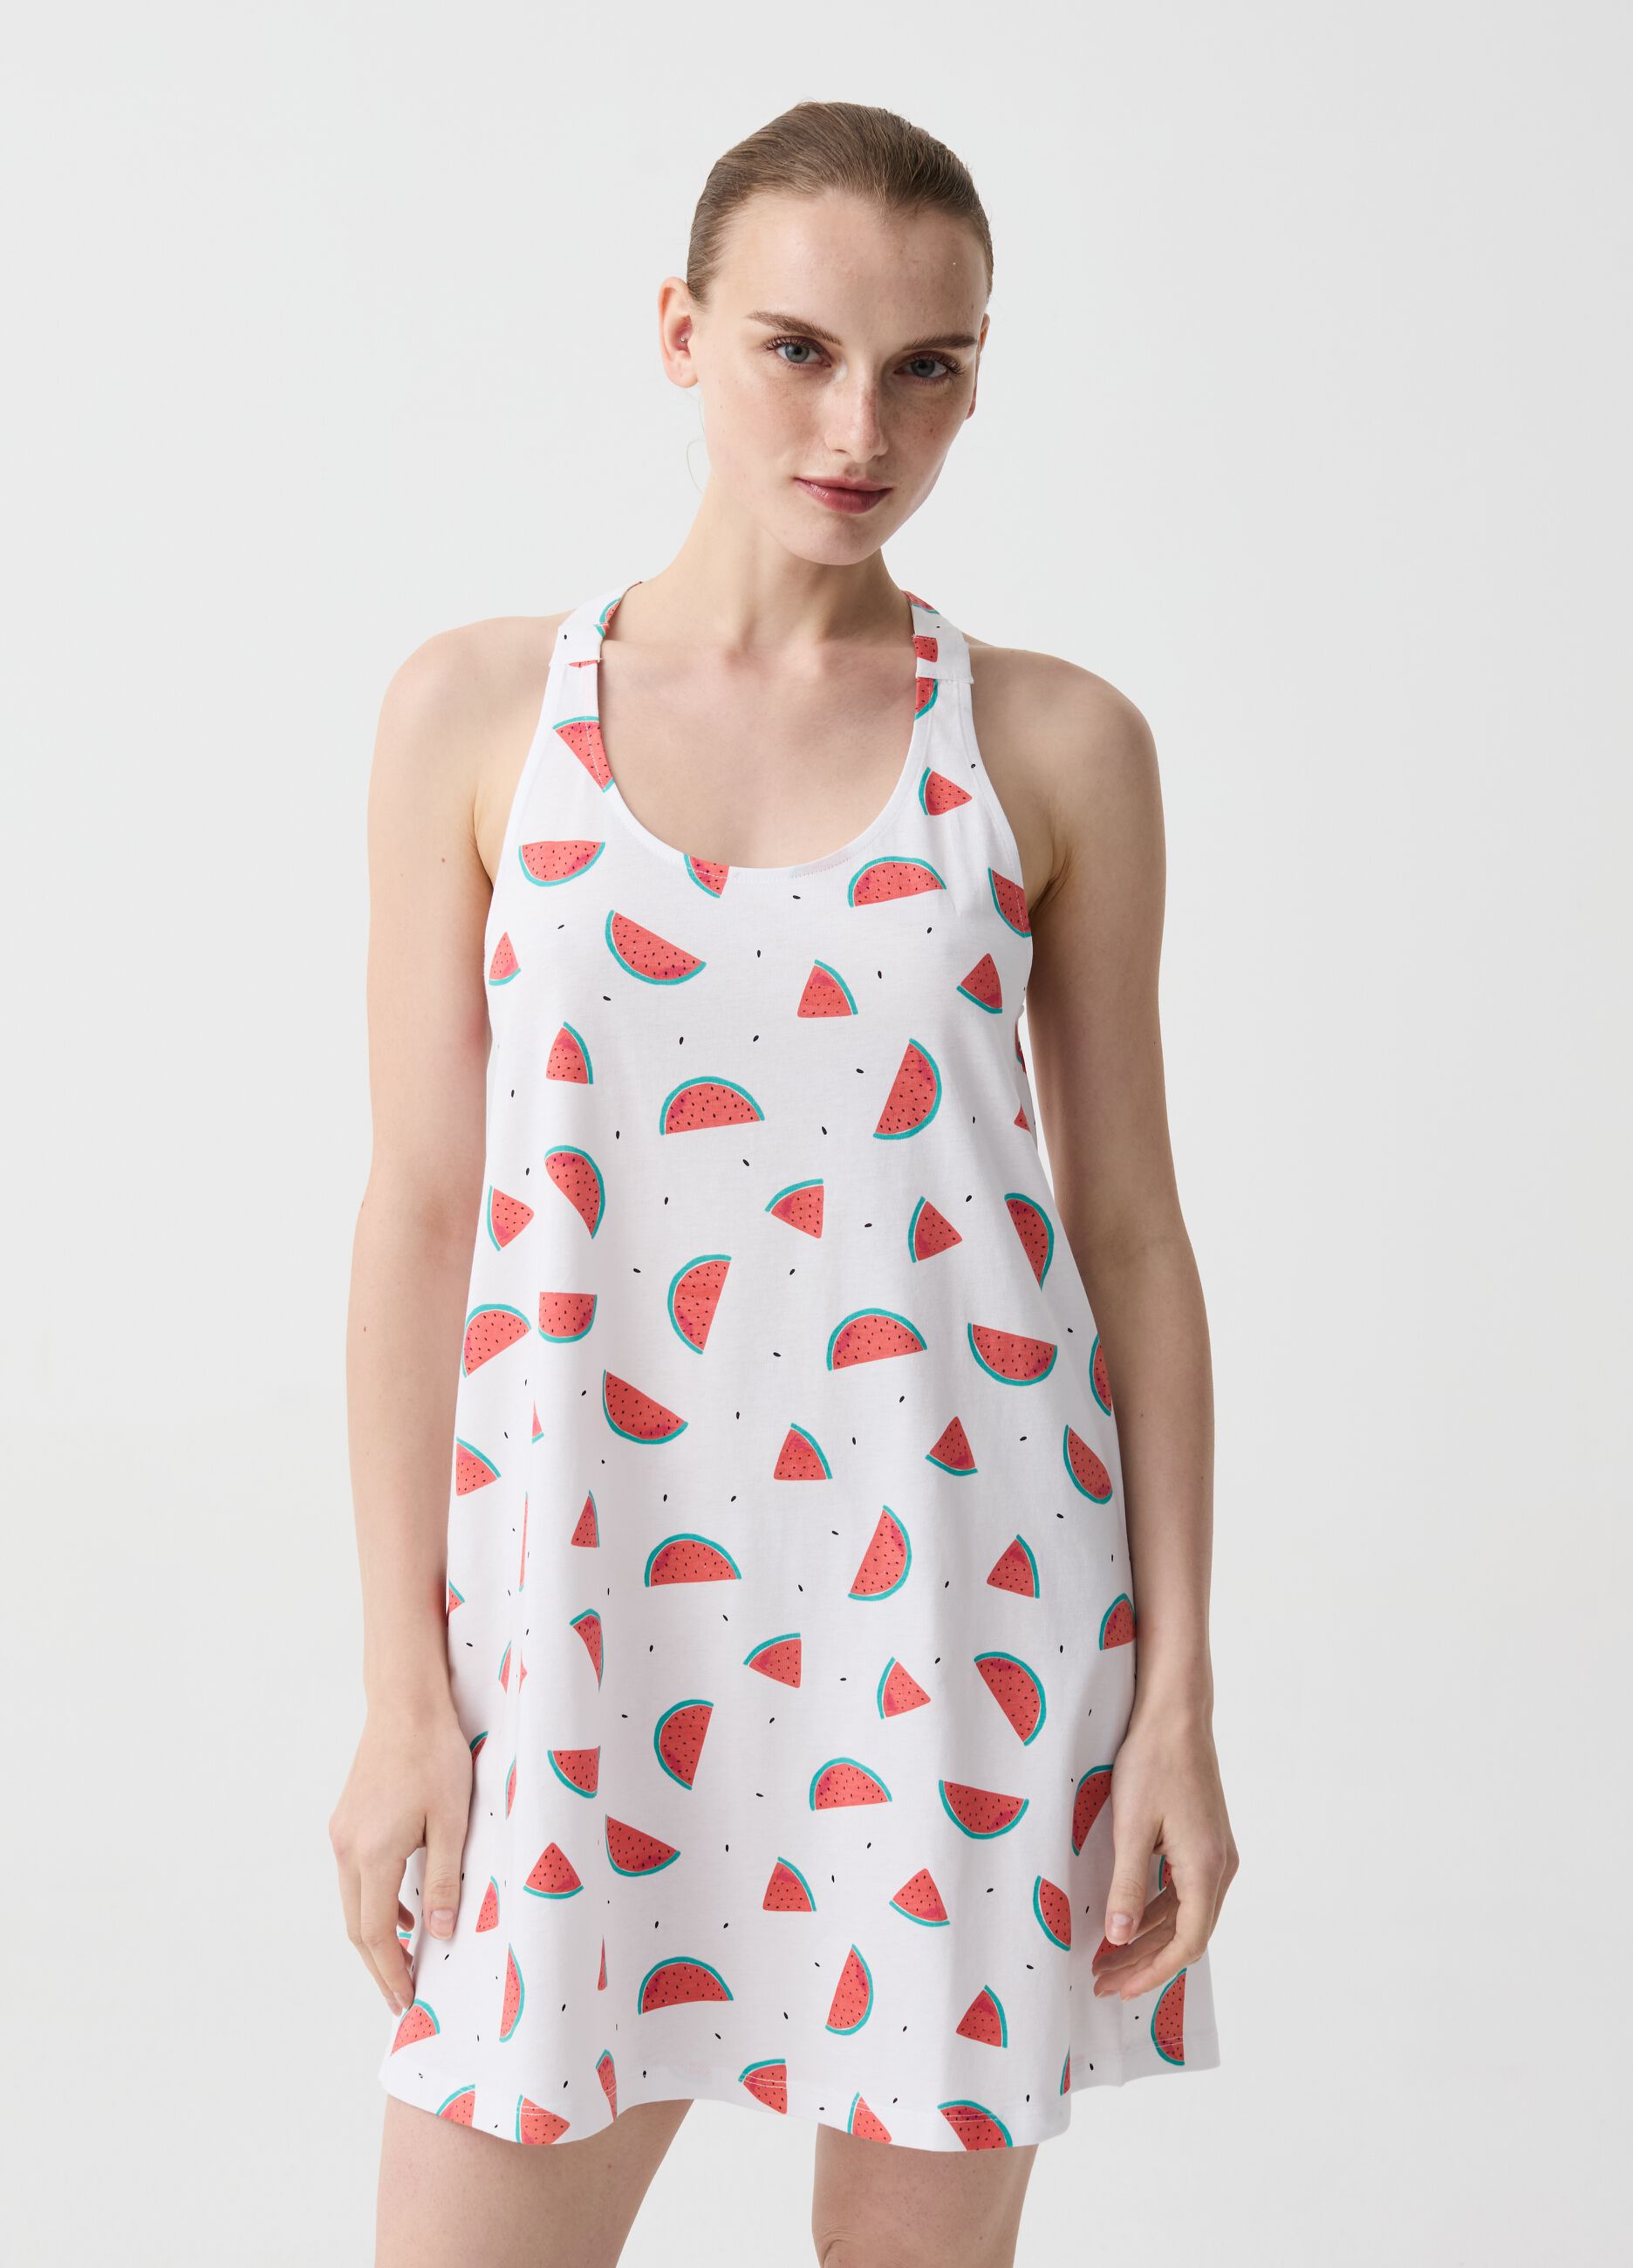 Nightdress with watermelon print